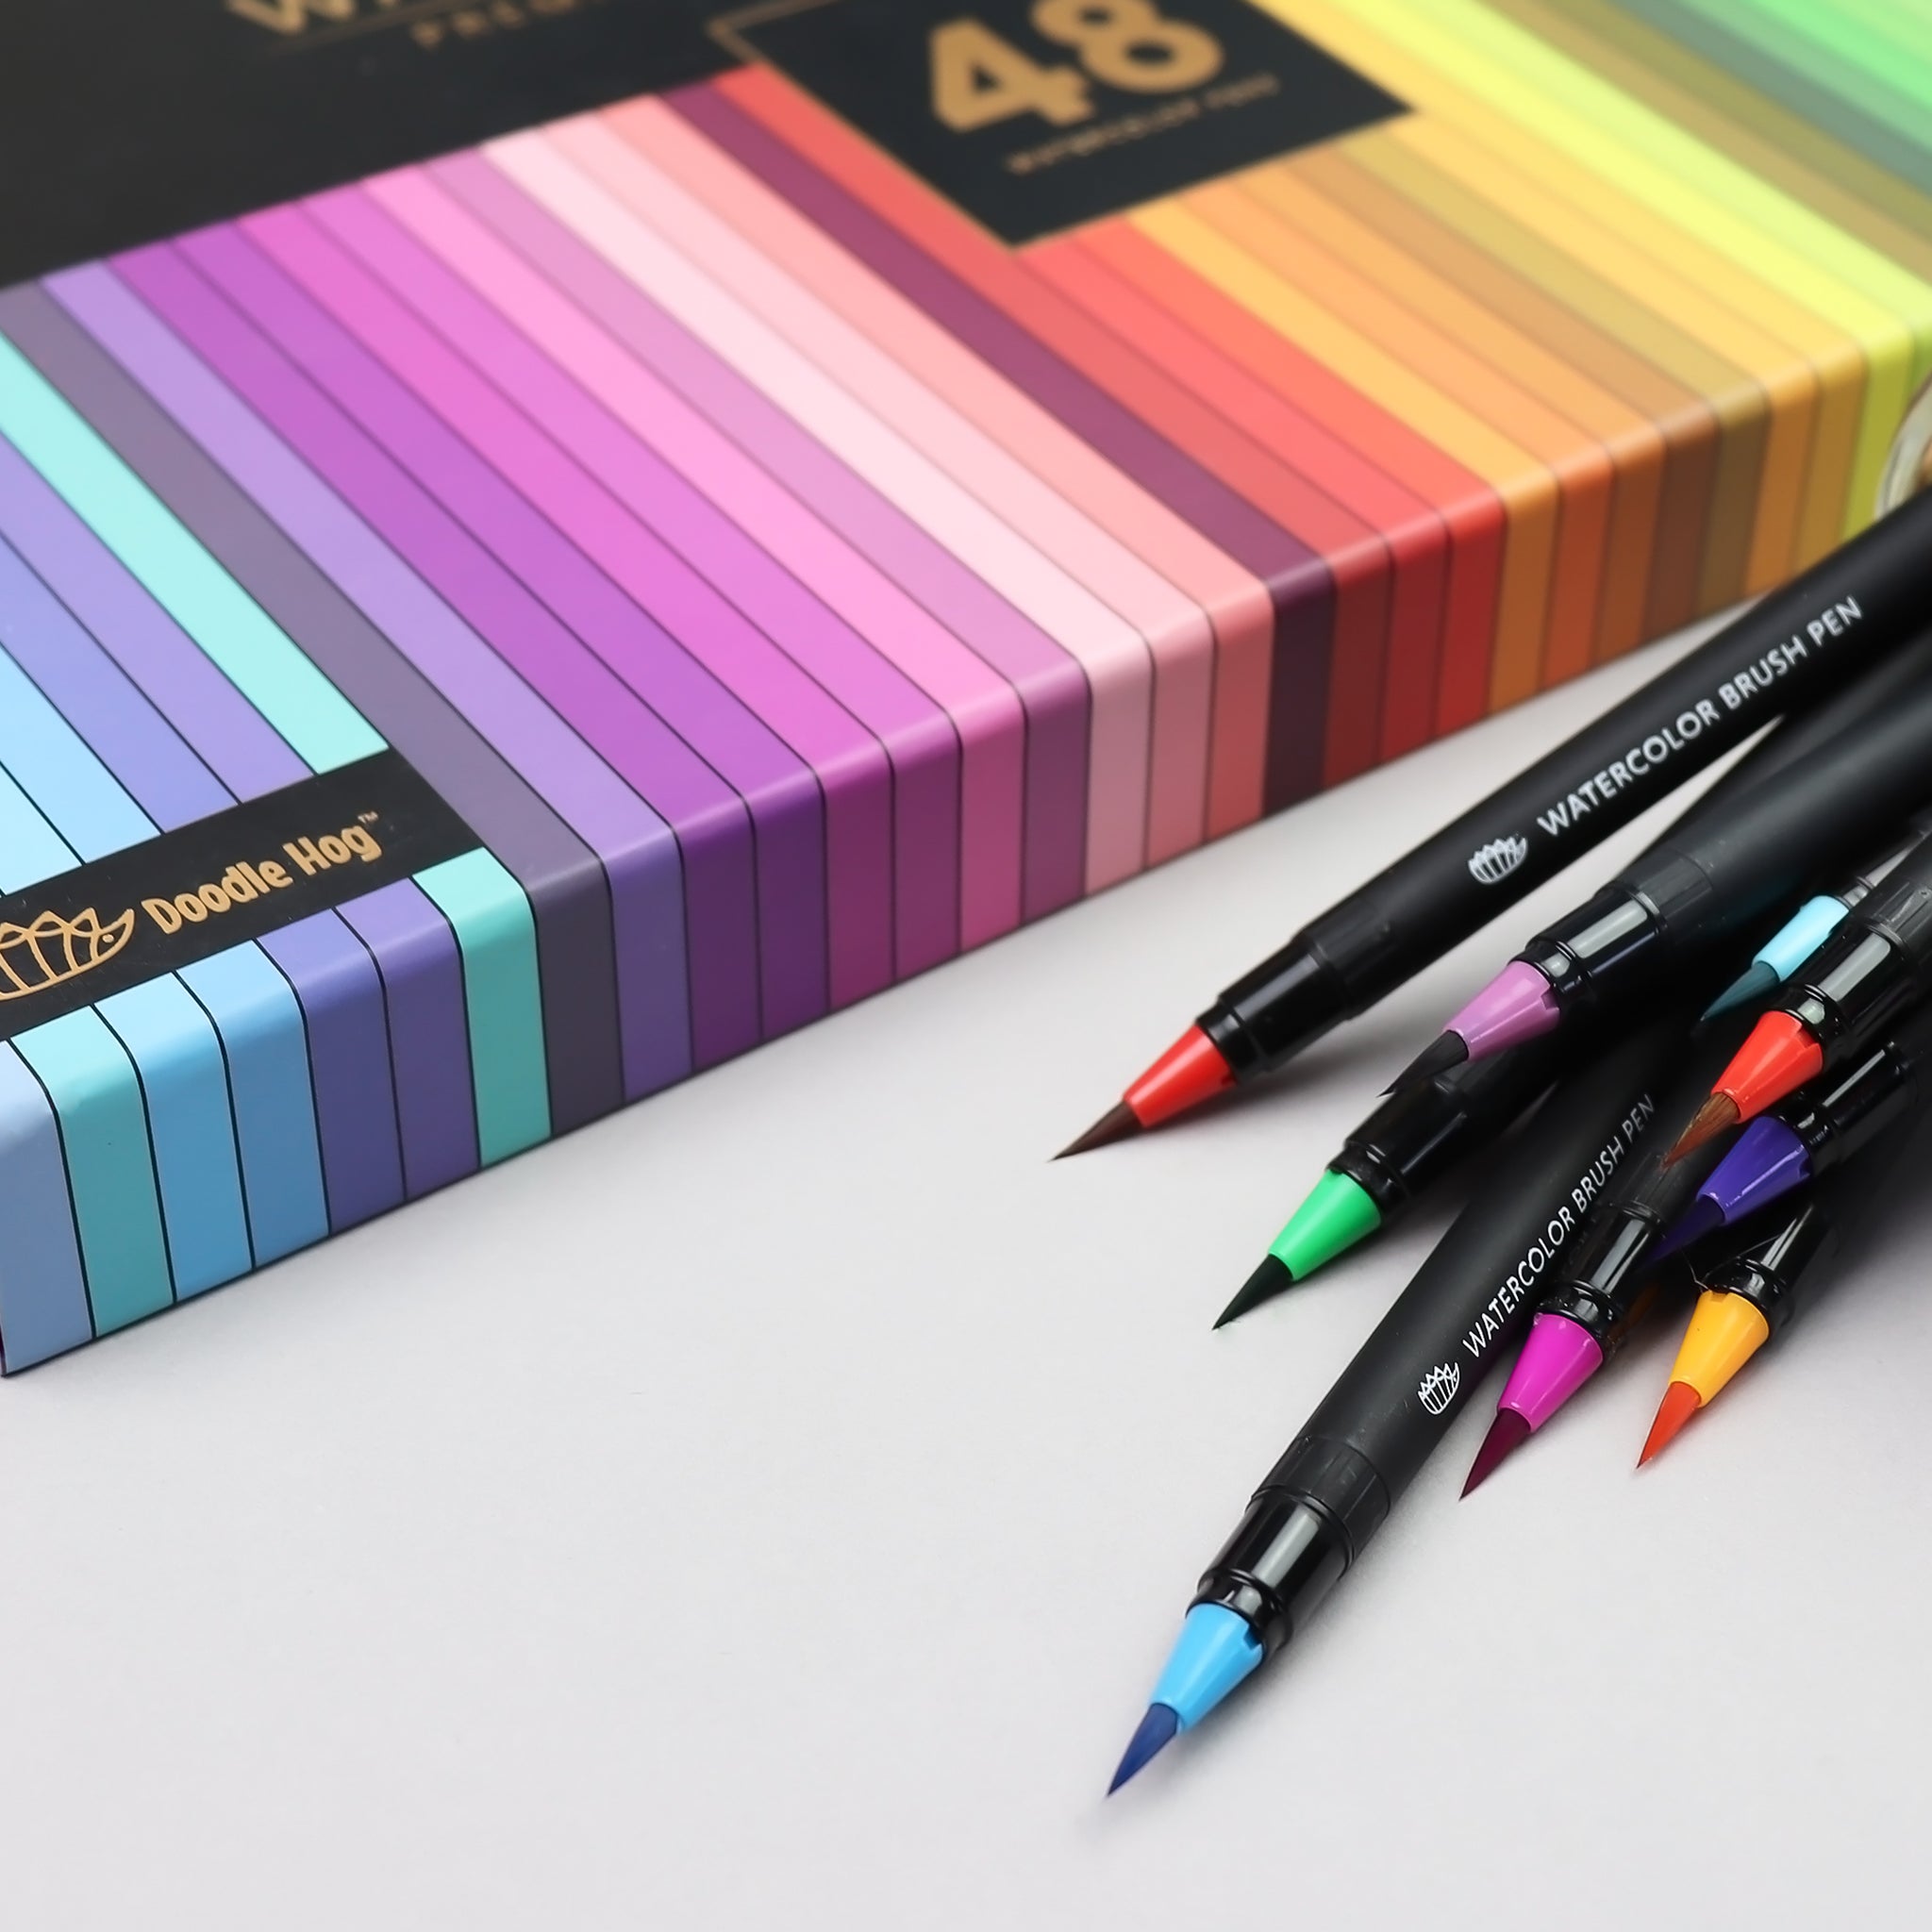 ARTISTRO Watercolor Brush Pens, 48 Colors Set + 2 Water Brush Pens. Un –  WoodArtSupply